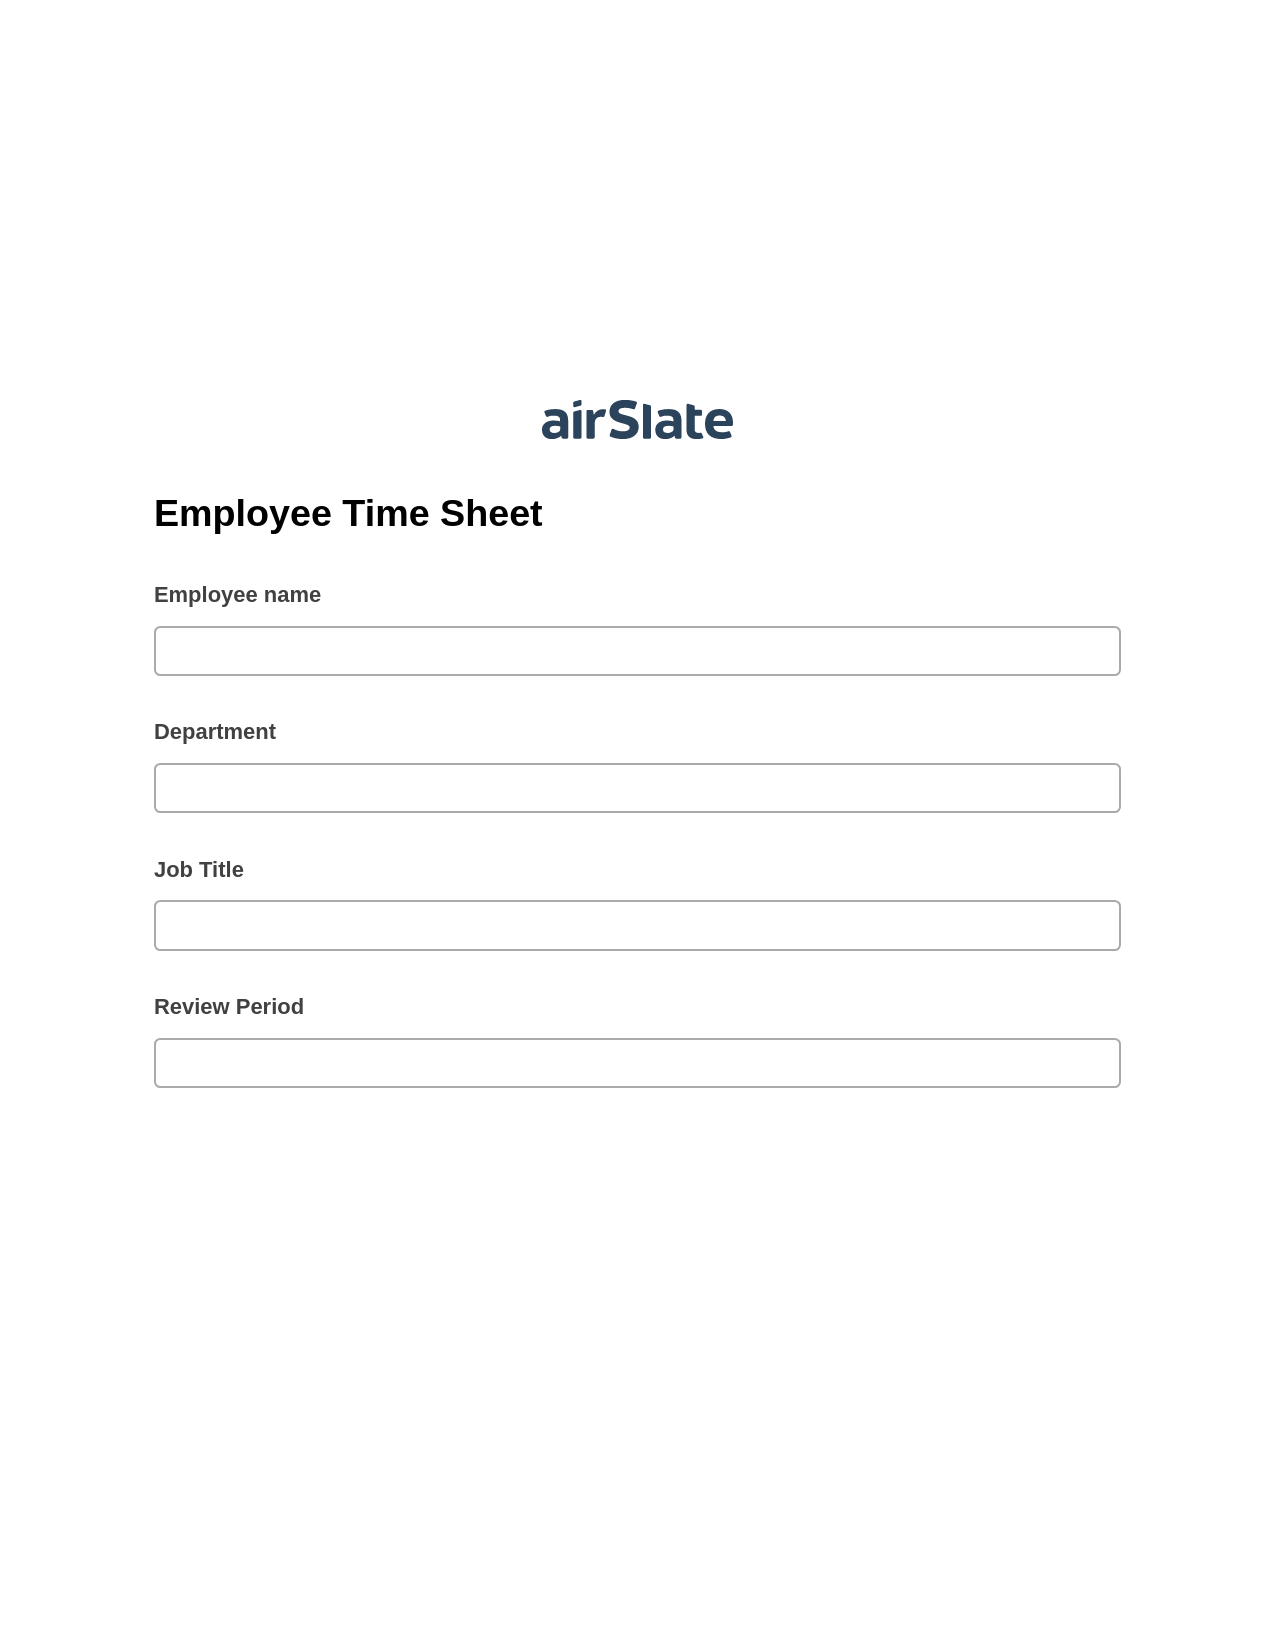 Multirole Employee Time Sheet Pre-fill from CSV File Bot, Send a Slate to Salesforce Contact Bot, Slack Two-Way Binding Bot